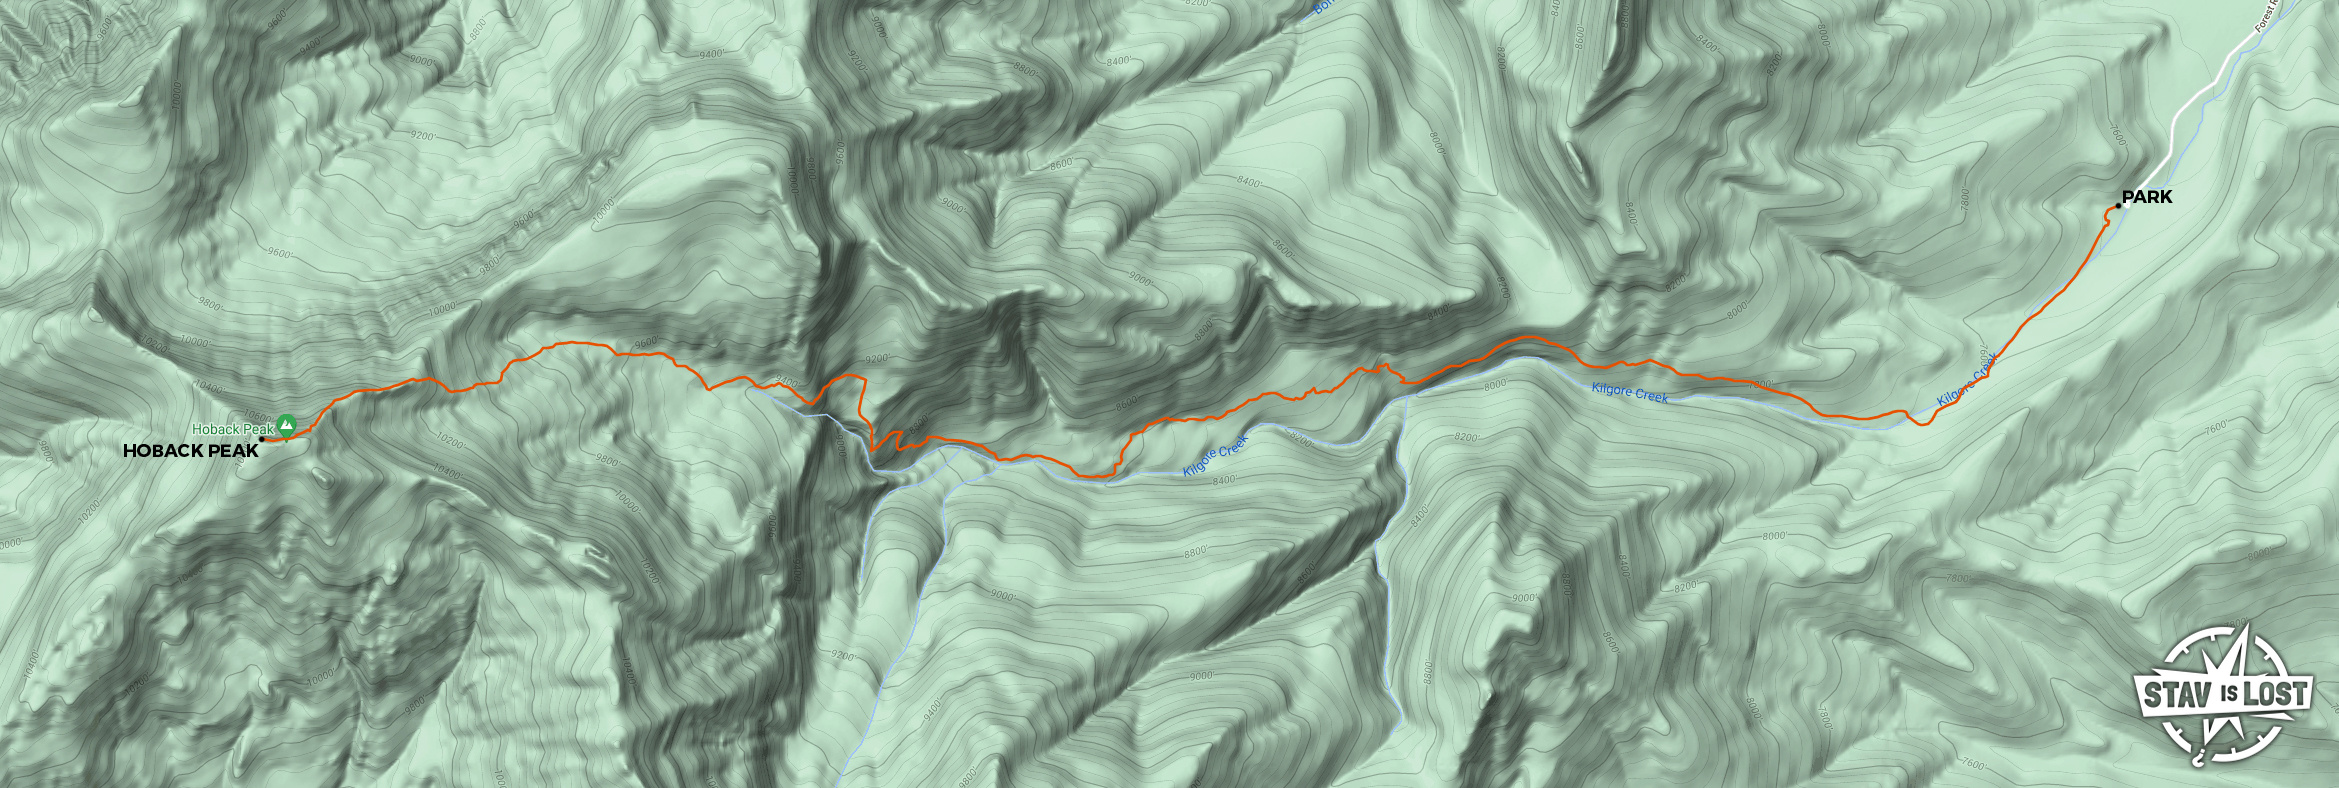 map for Hoback Peak via Kilgore Creek Trail by stav is lost